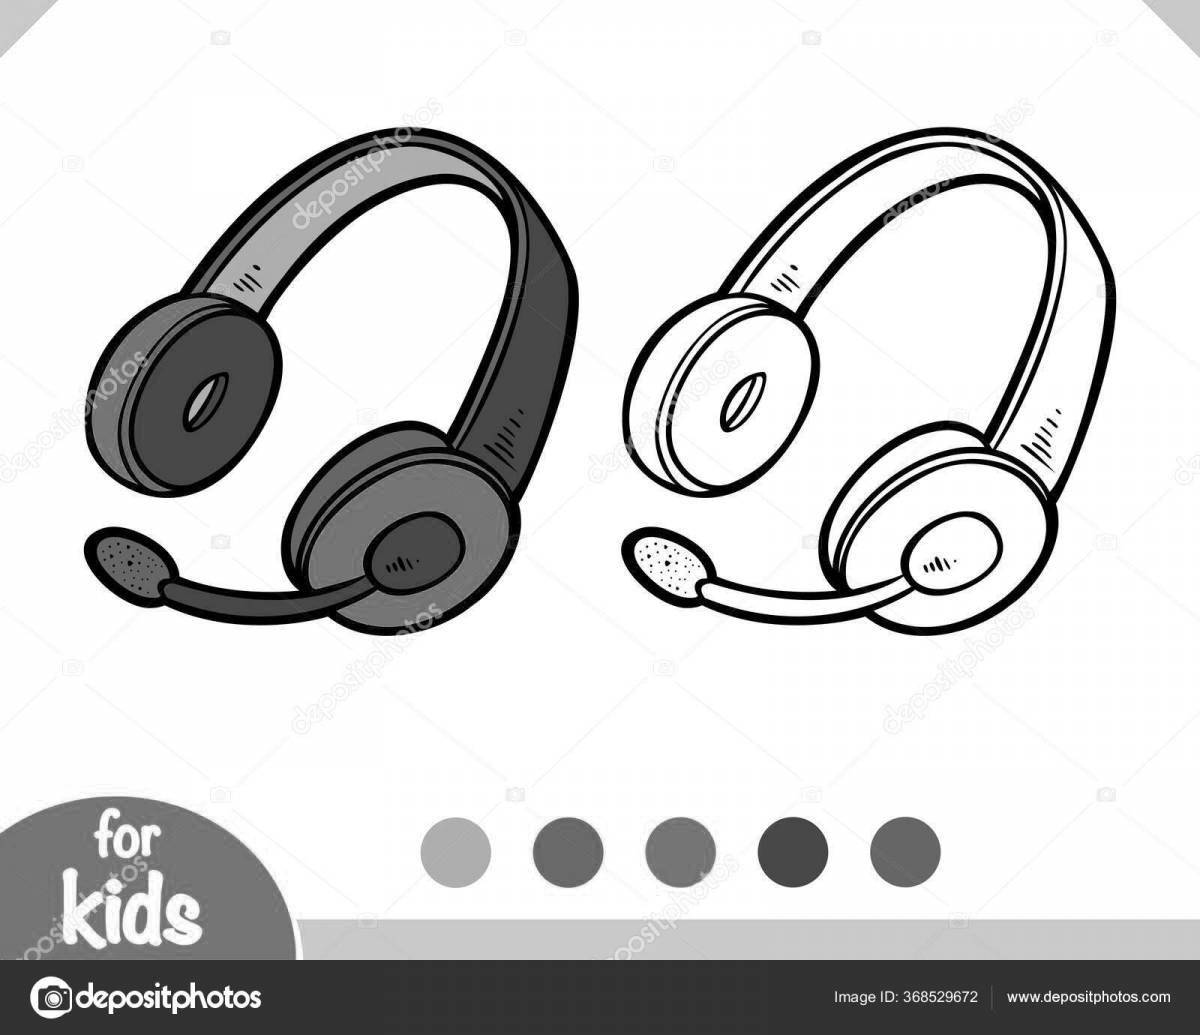 Fun headphone coloring for kids